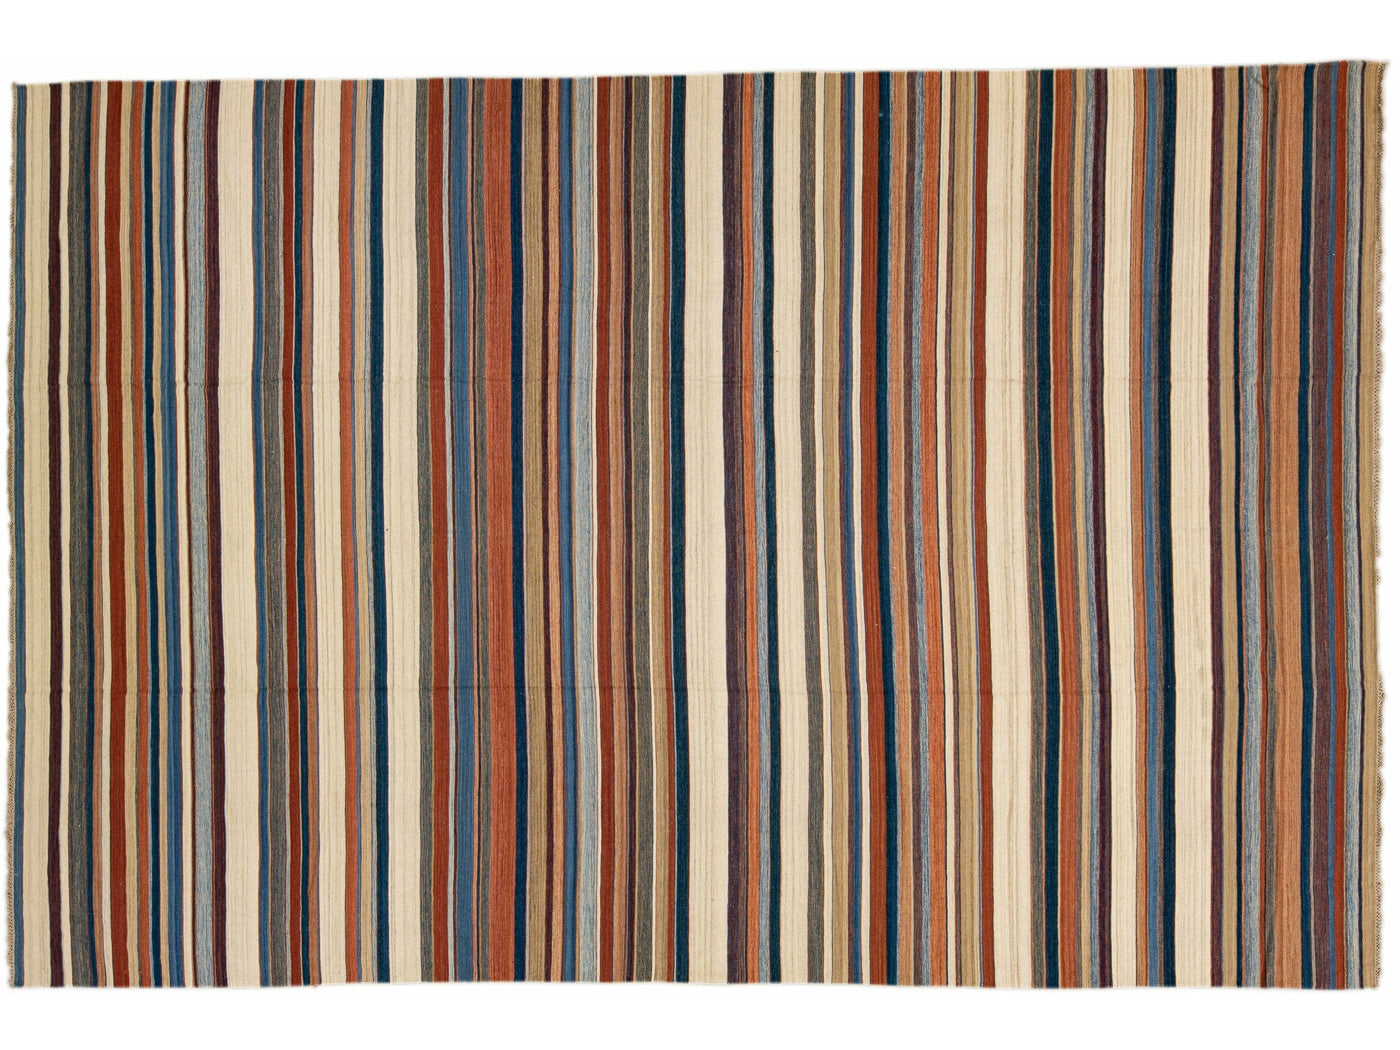 Modern Oversize Kilim Handmade Earthy Tones Striped Pattern Wool Rug